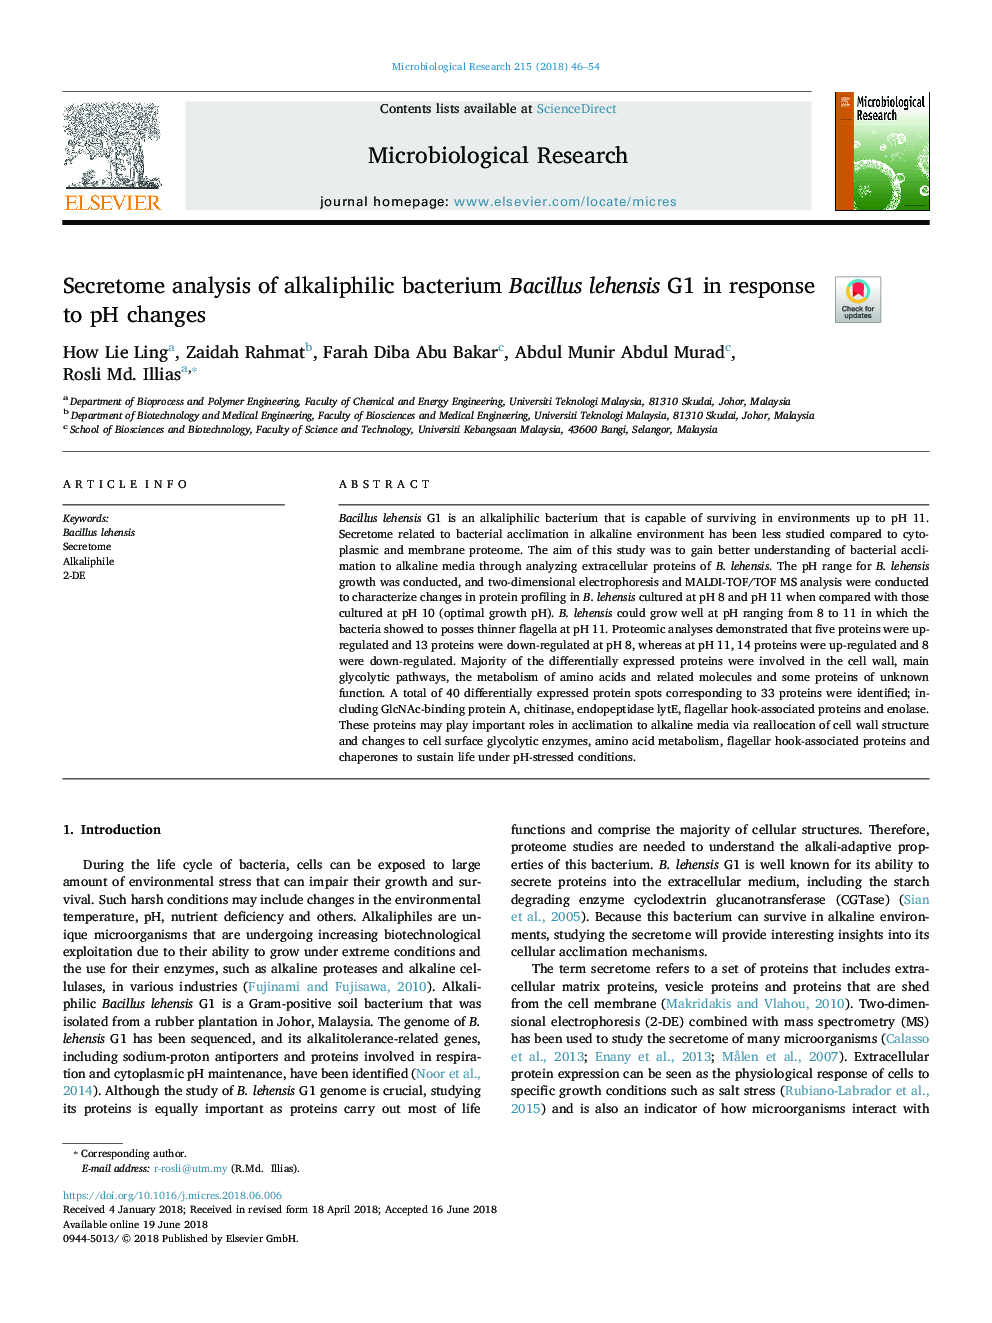 Secretome analysis of alkaliphilic bacterium Bacillus lehensis G1 in response to pH changes